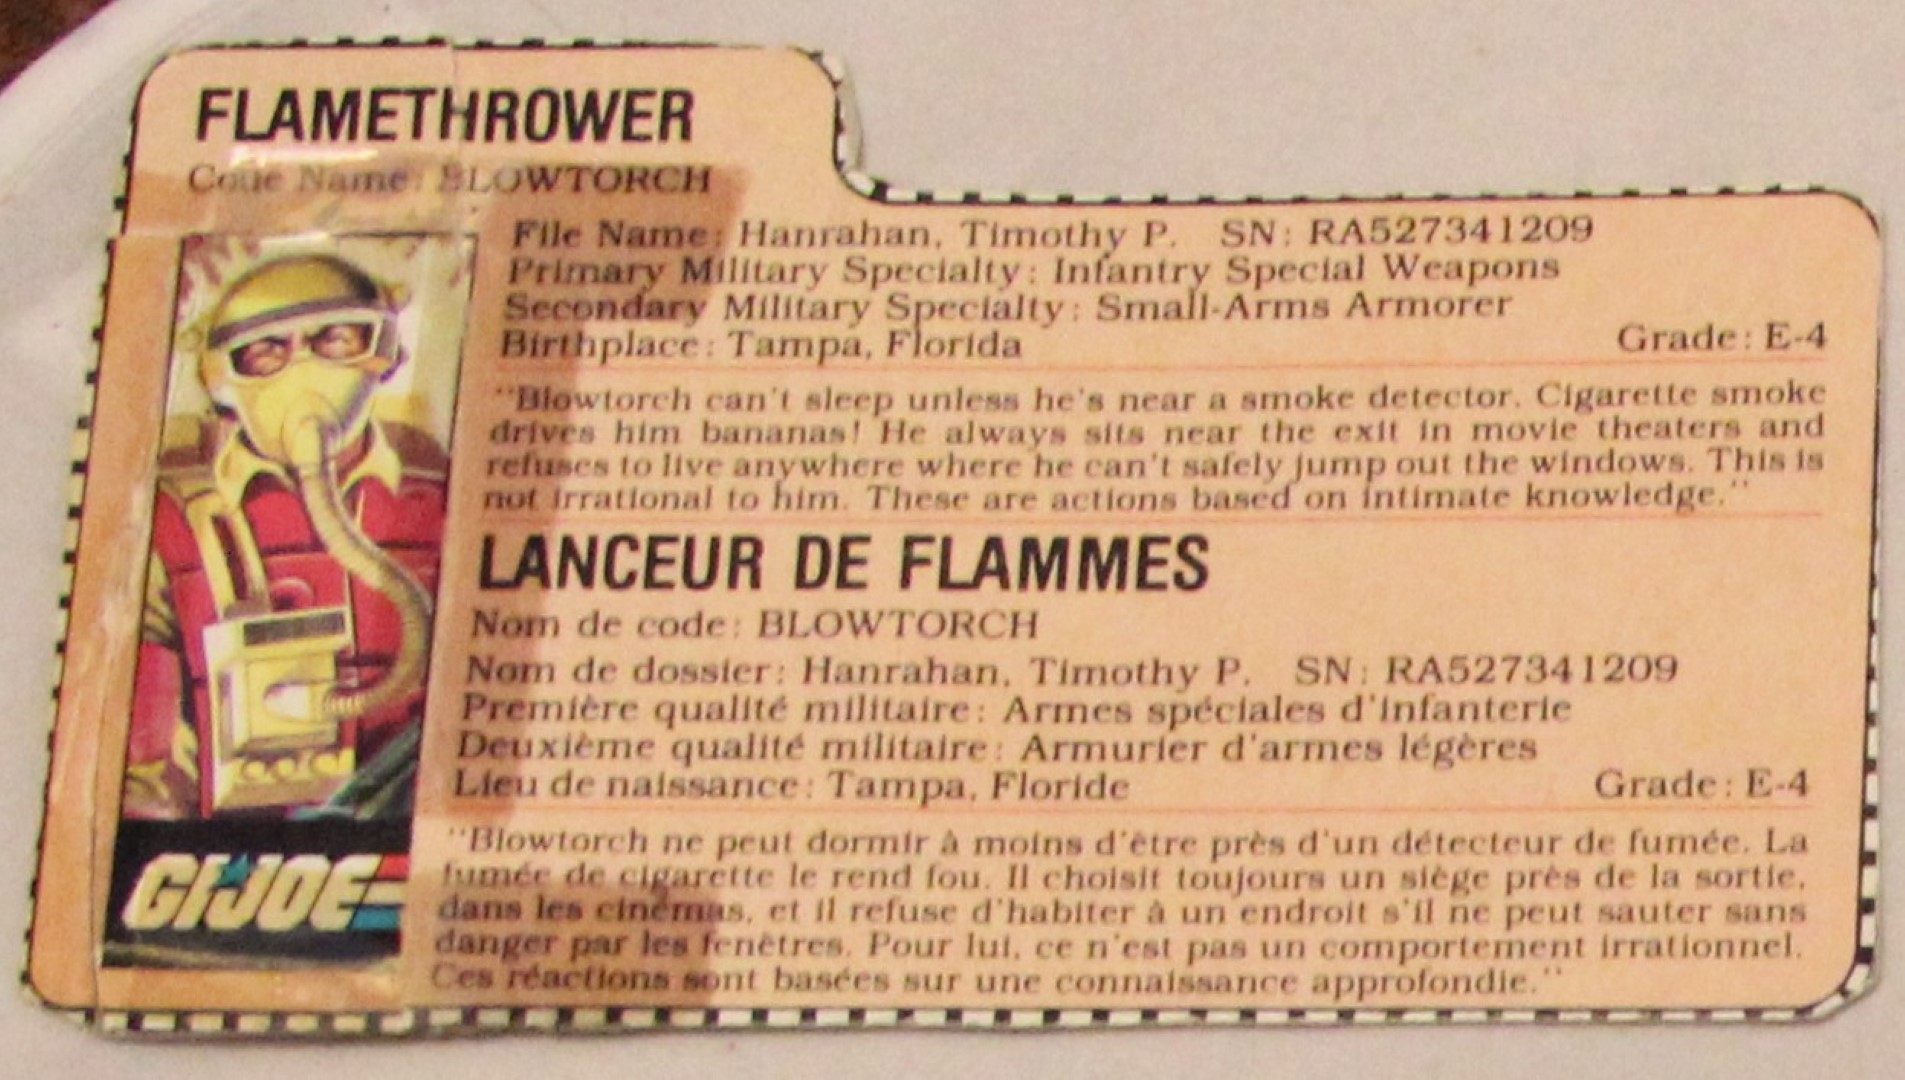 1984 blowtorch file card